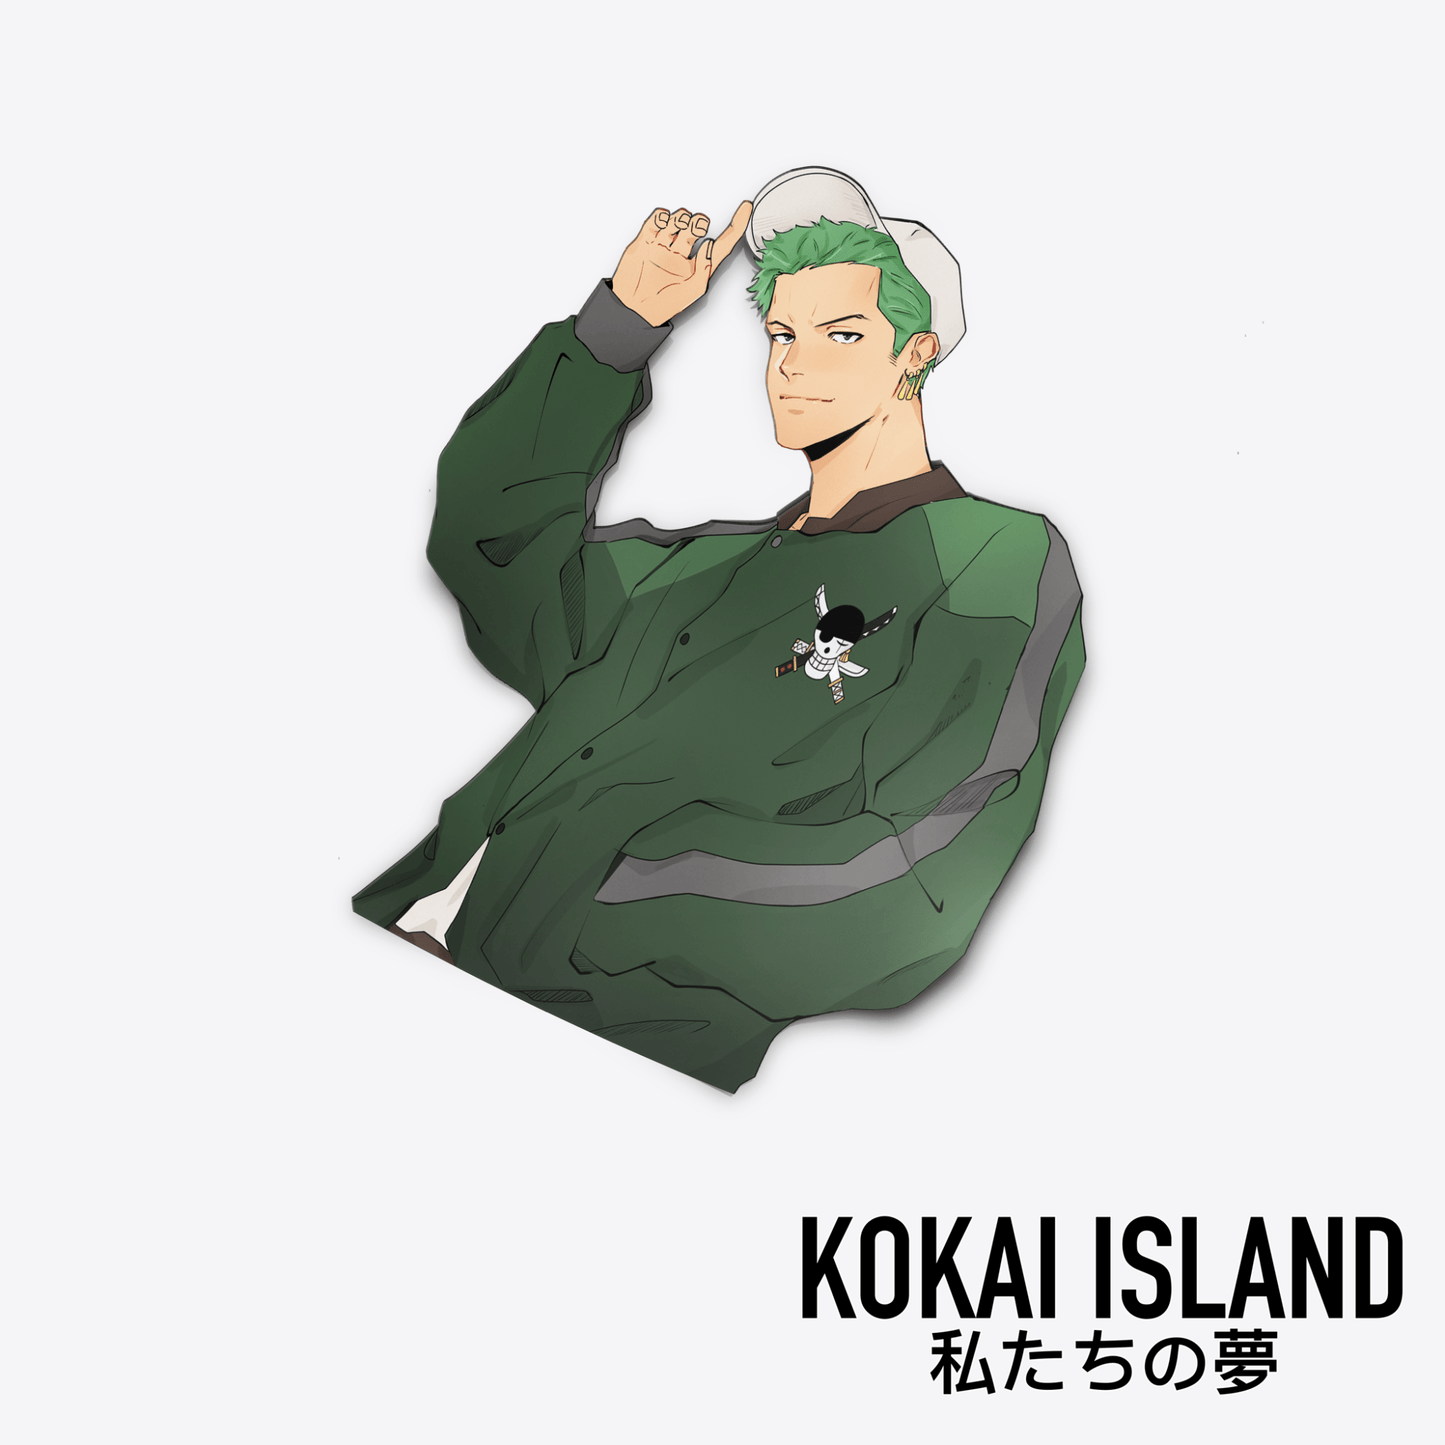 Green Pirate DecalDecalKokai Island